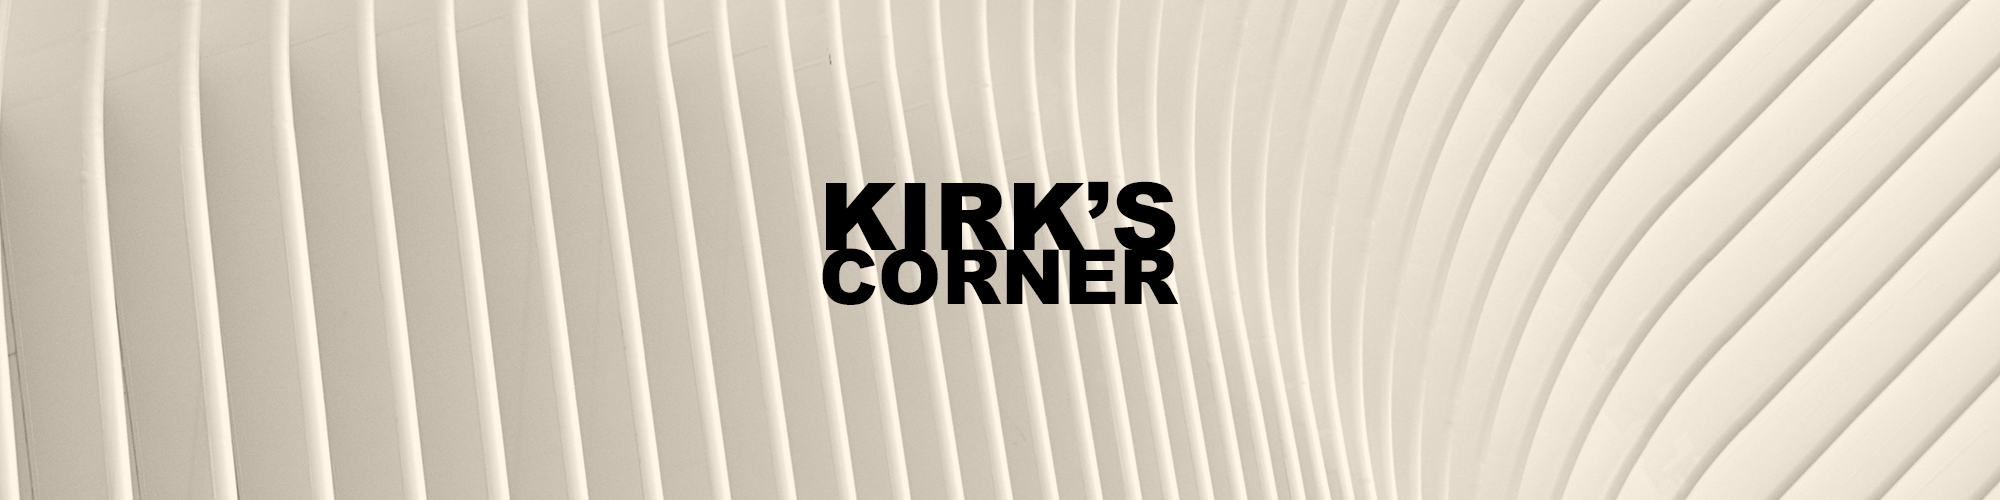 Kirk's Corner 005: 'Déjà Vu' Album Review